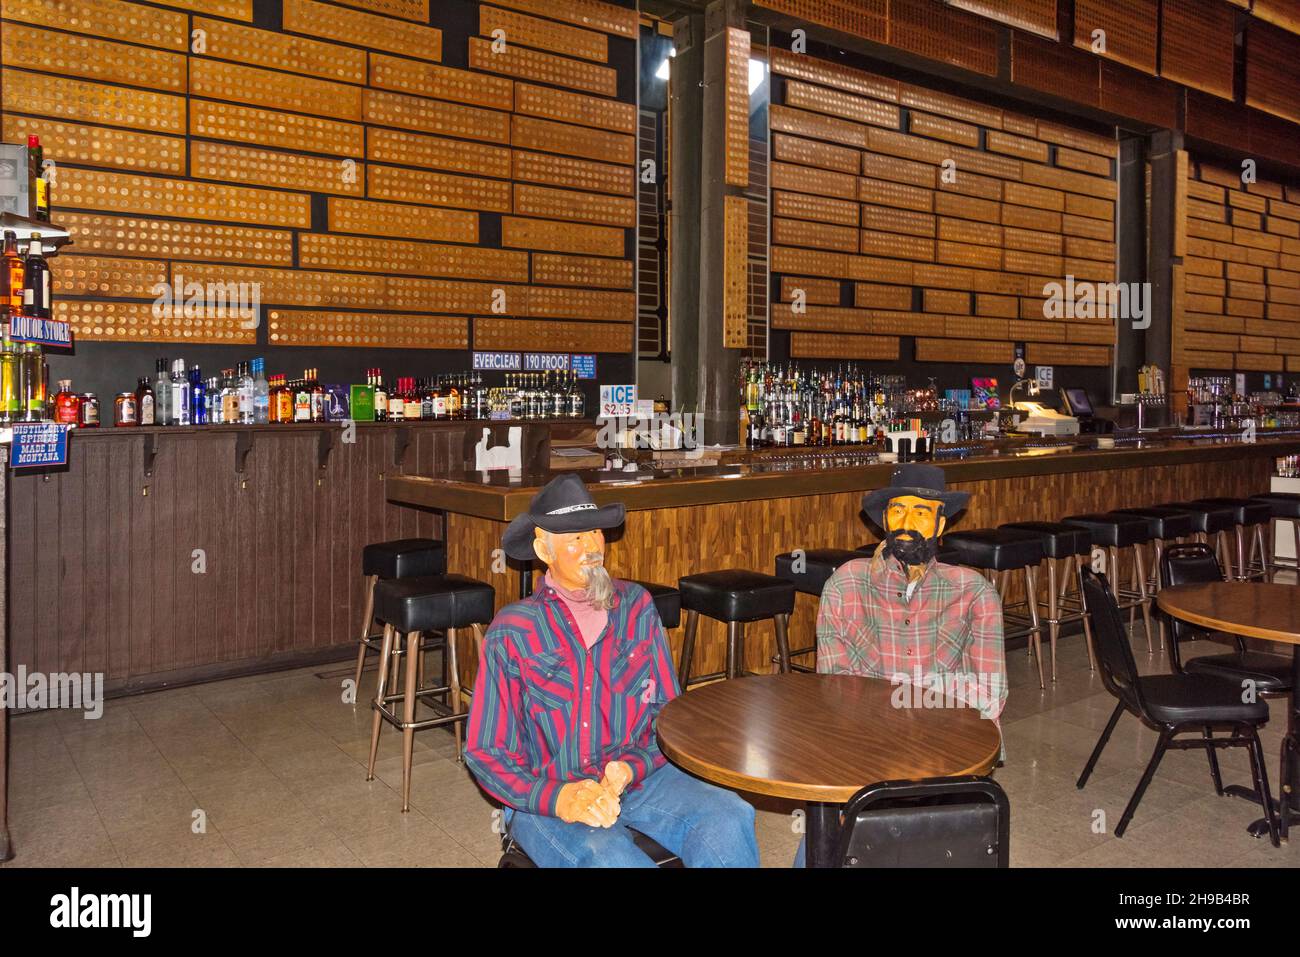 Fifty Thousand Dollar Bar, Montana State, USA Stock Photo